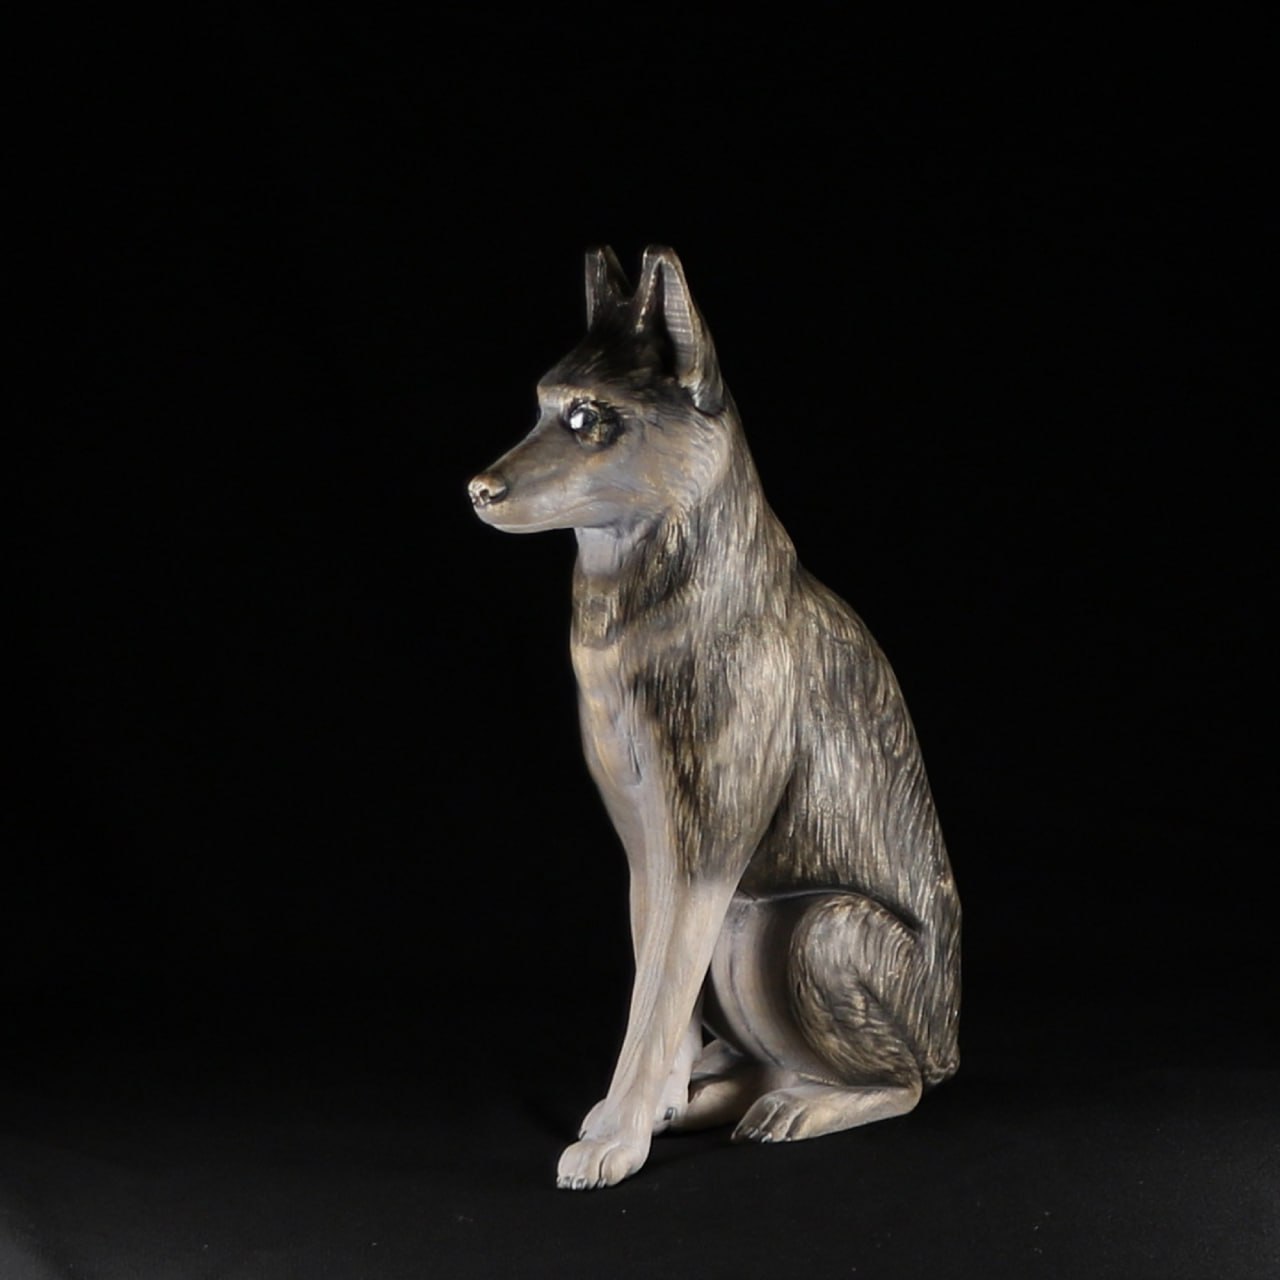 Captivating Wooden Husky Dog Statue: A Masterpiece of Craftsmanship